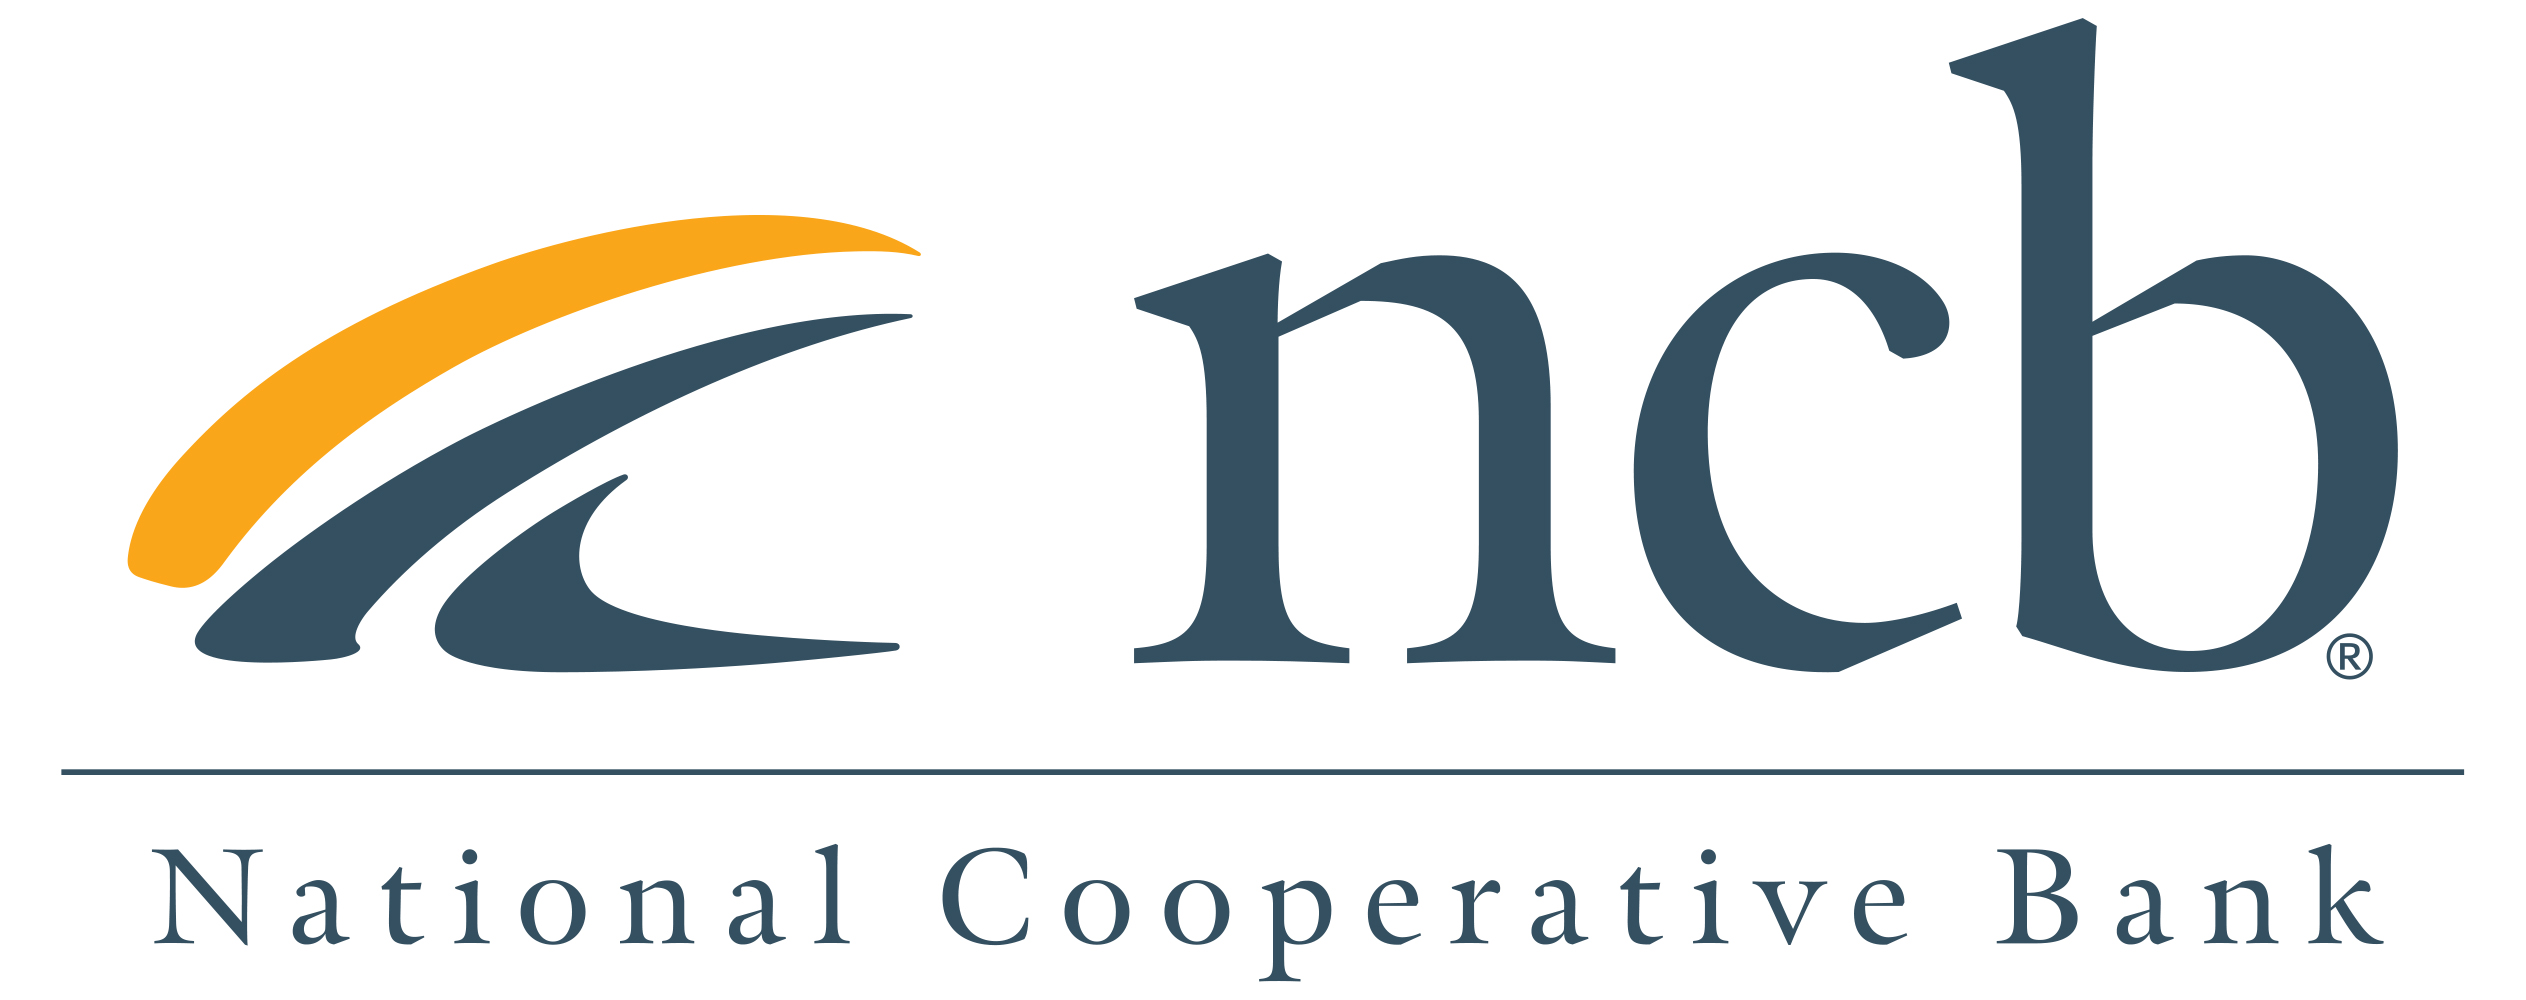 National Cooperative Bank Logo